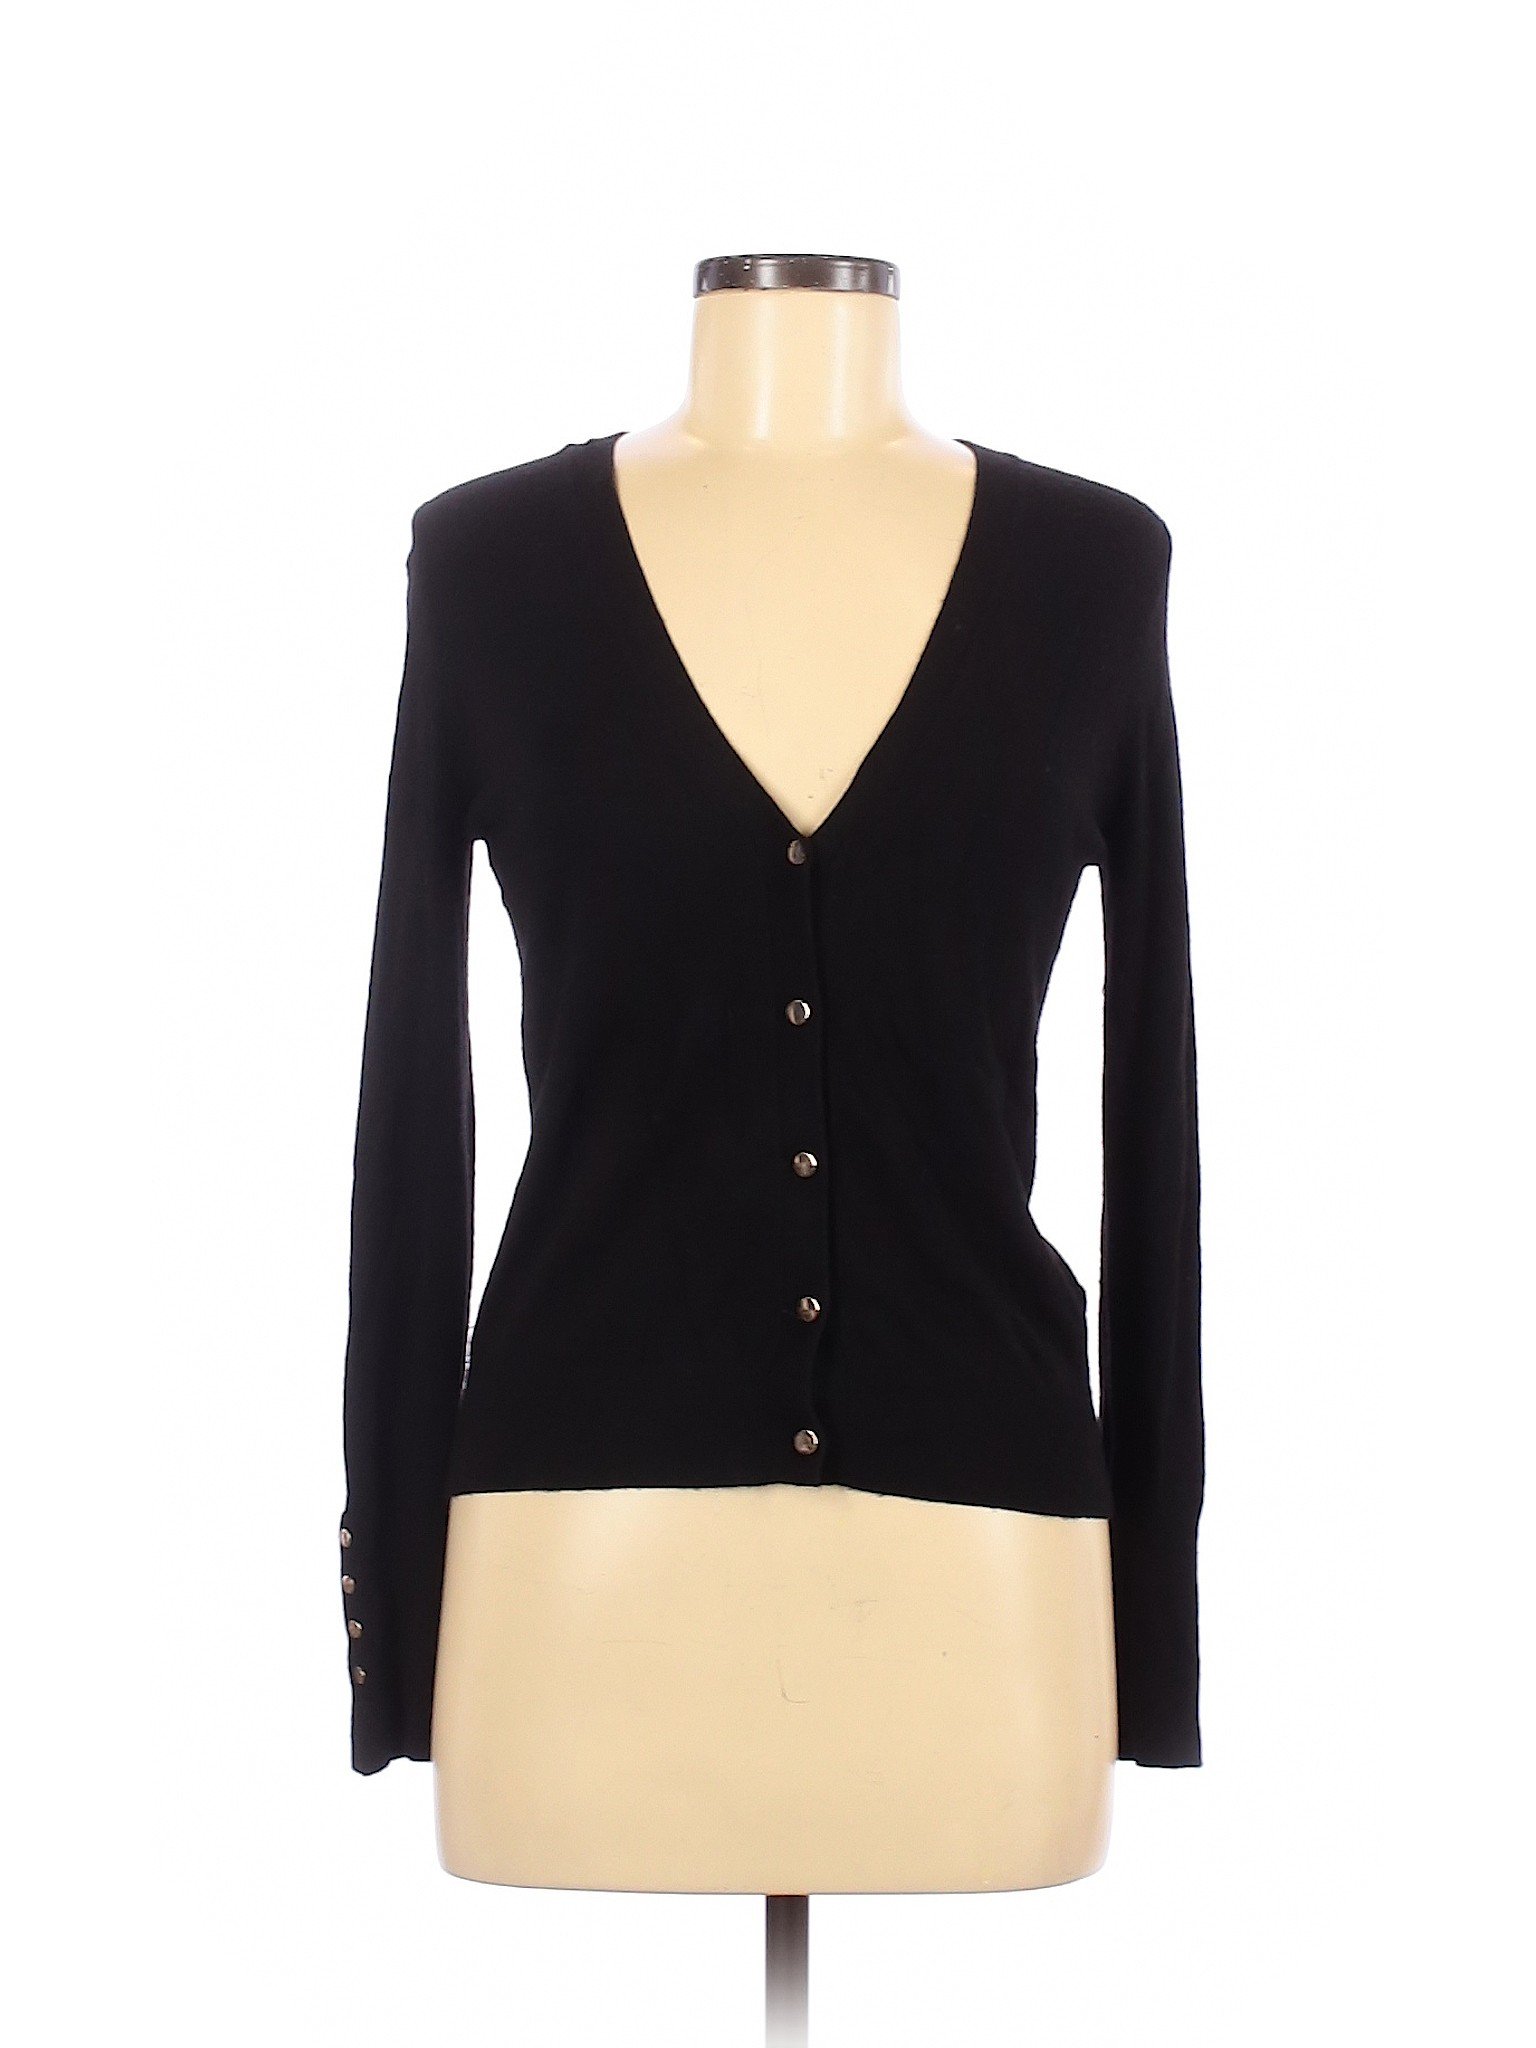 Zara Women Black Cardigan S | eBay